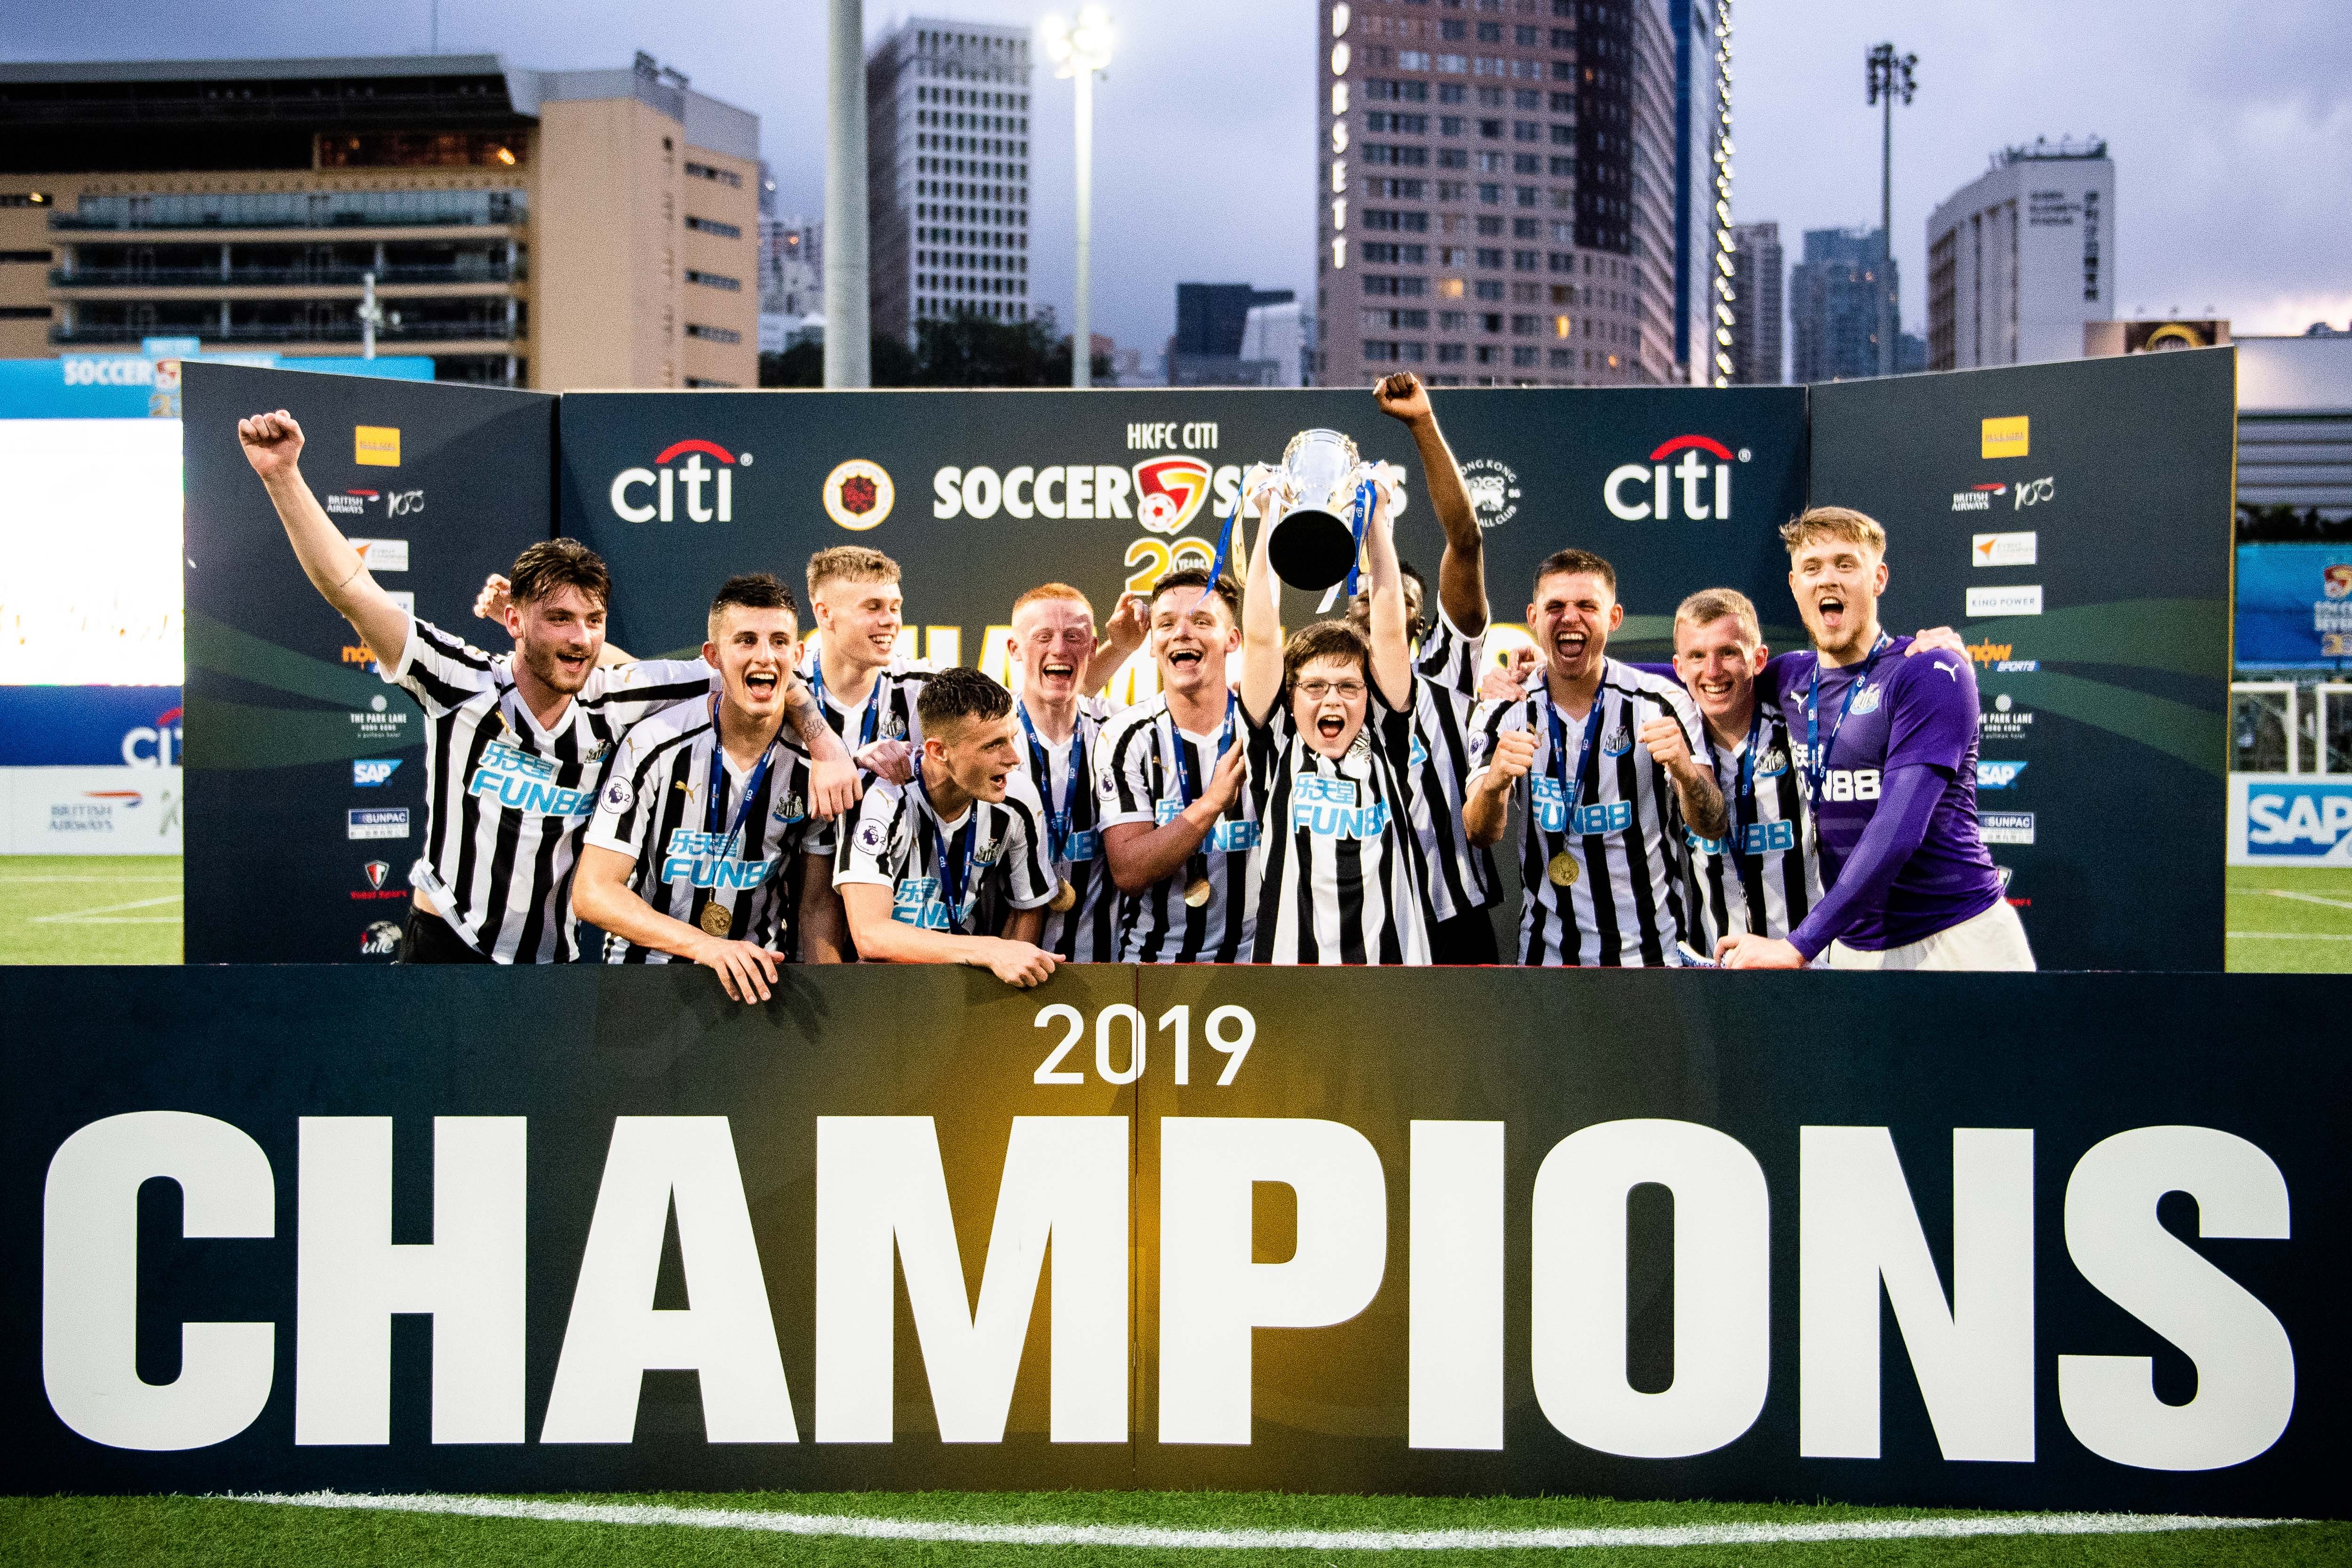 Newcastle United celebrate winning the HKFC Citi Soccer Sevens in 2019. Photo: Eurasia Sport Images/HKFC Citi Soccer Sevens 2019